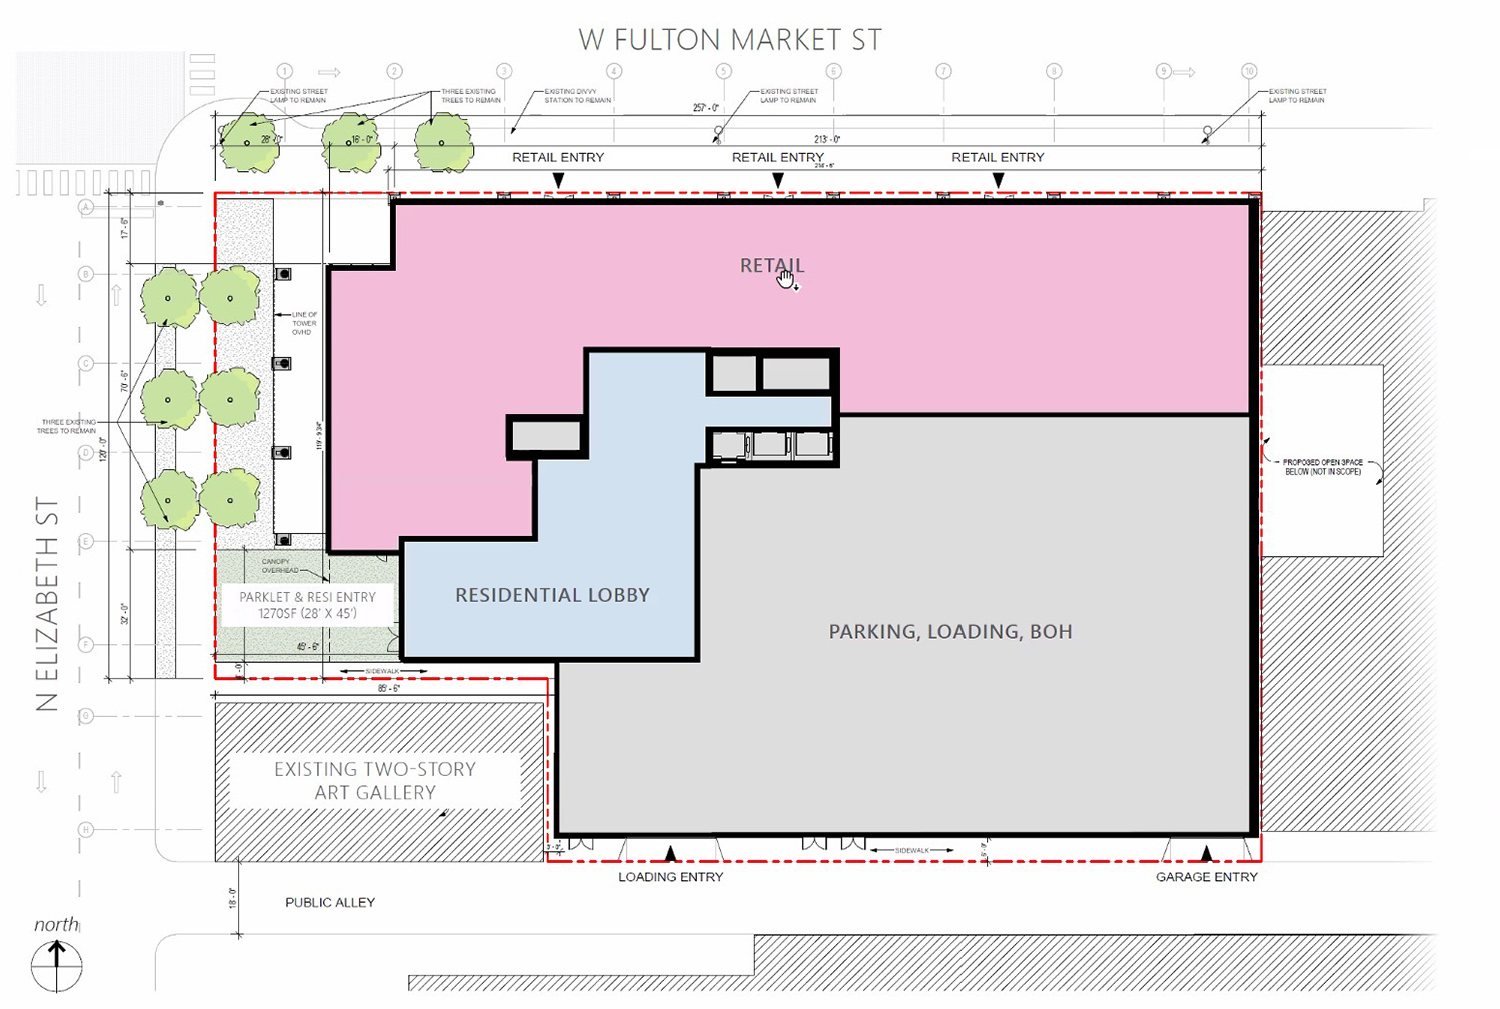 Ground Floor Plan for 1245 W Fulton Market. Drawing by Hartshorne Plunkard Architecture